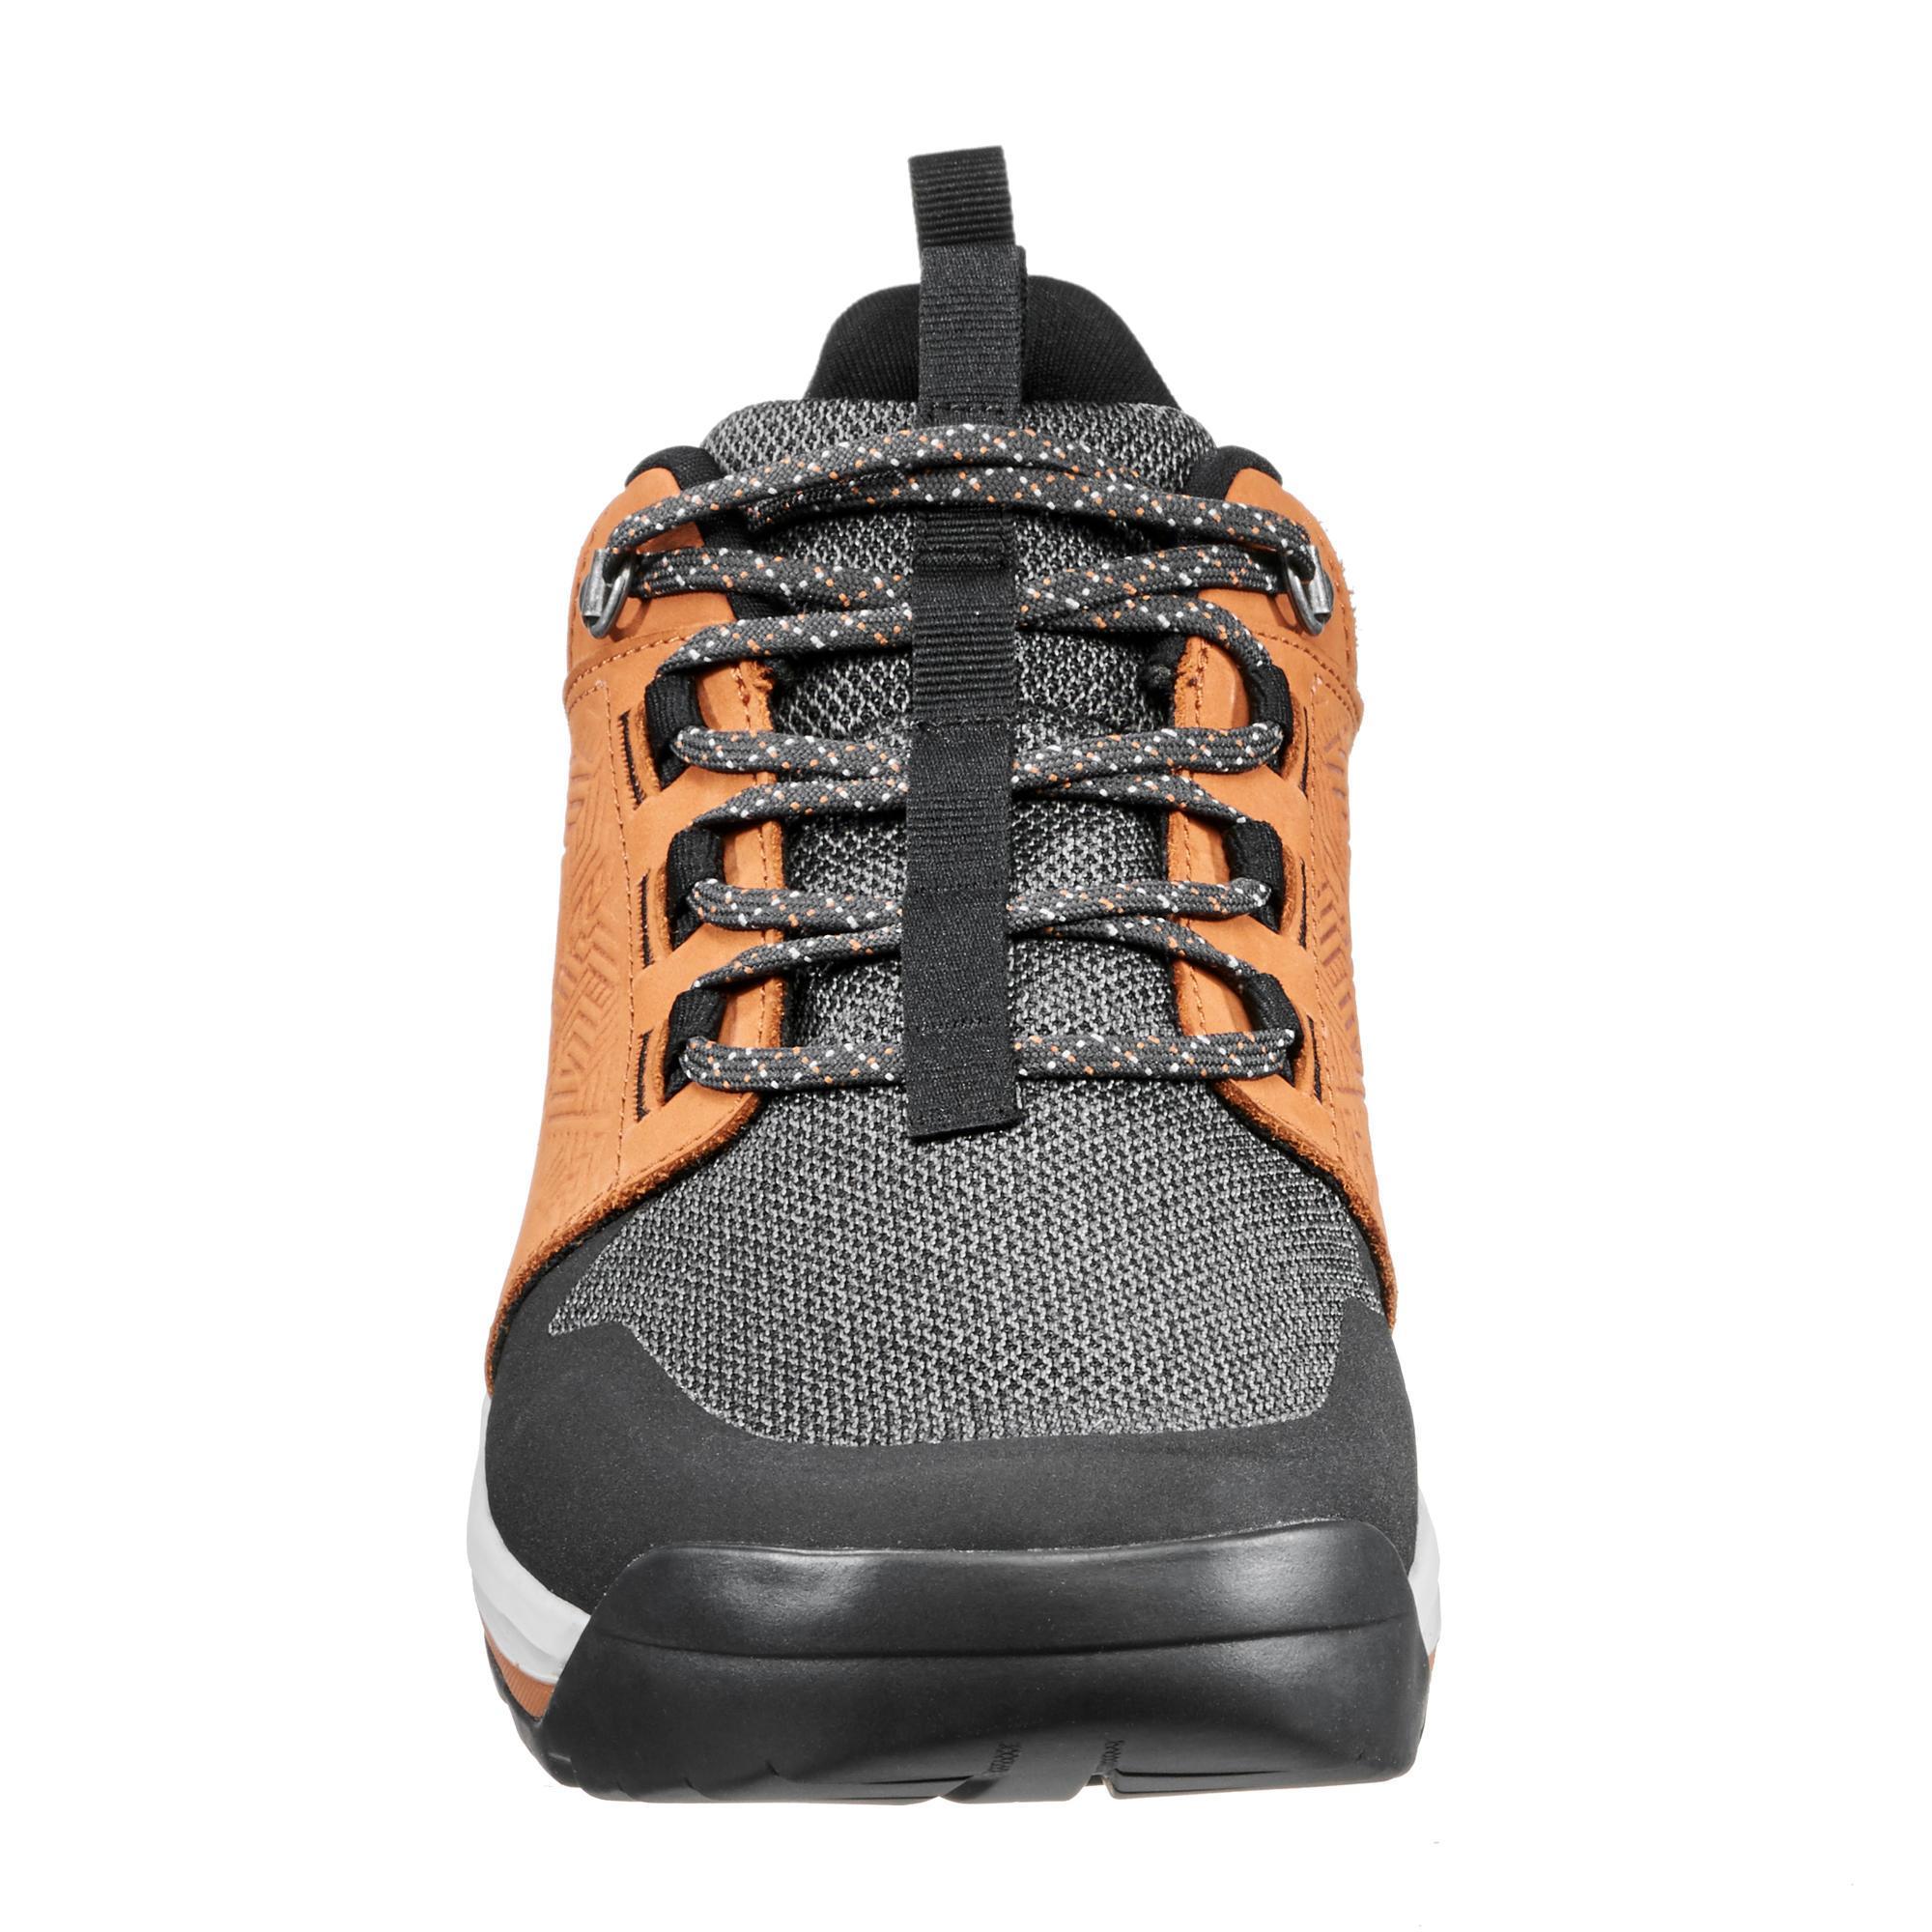 Men's hiking shoes NH500 - Decathlon